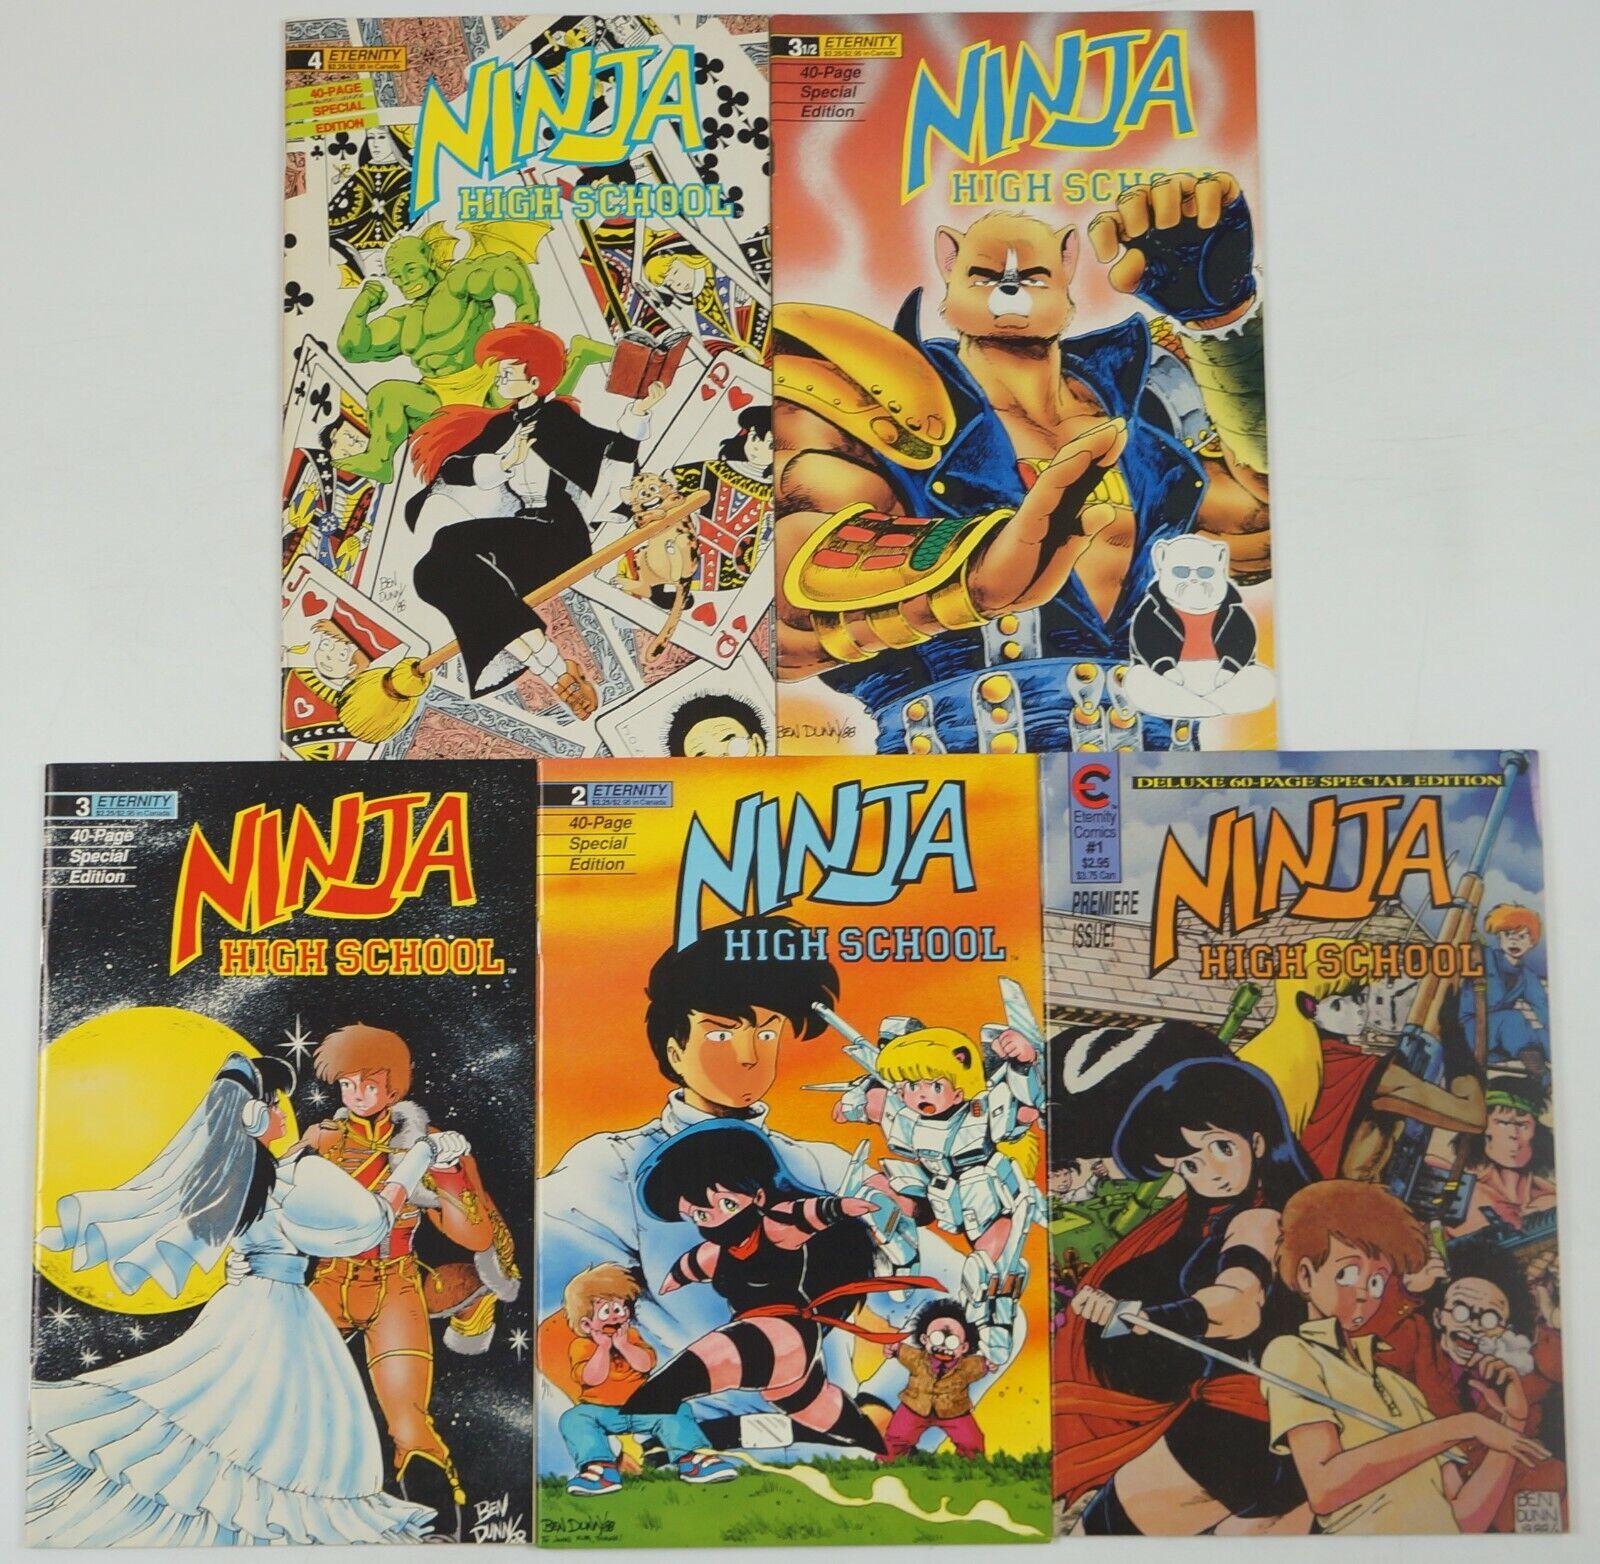 Ninja High School: the Special Edition #1-4 FN complete series + 3.5 ben dunn